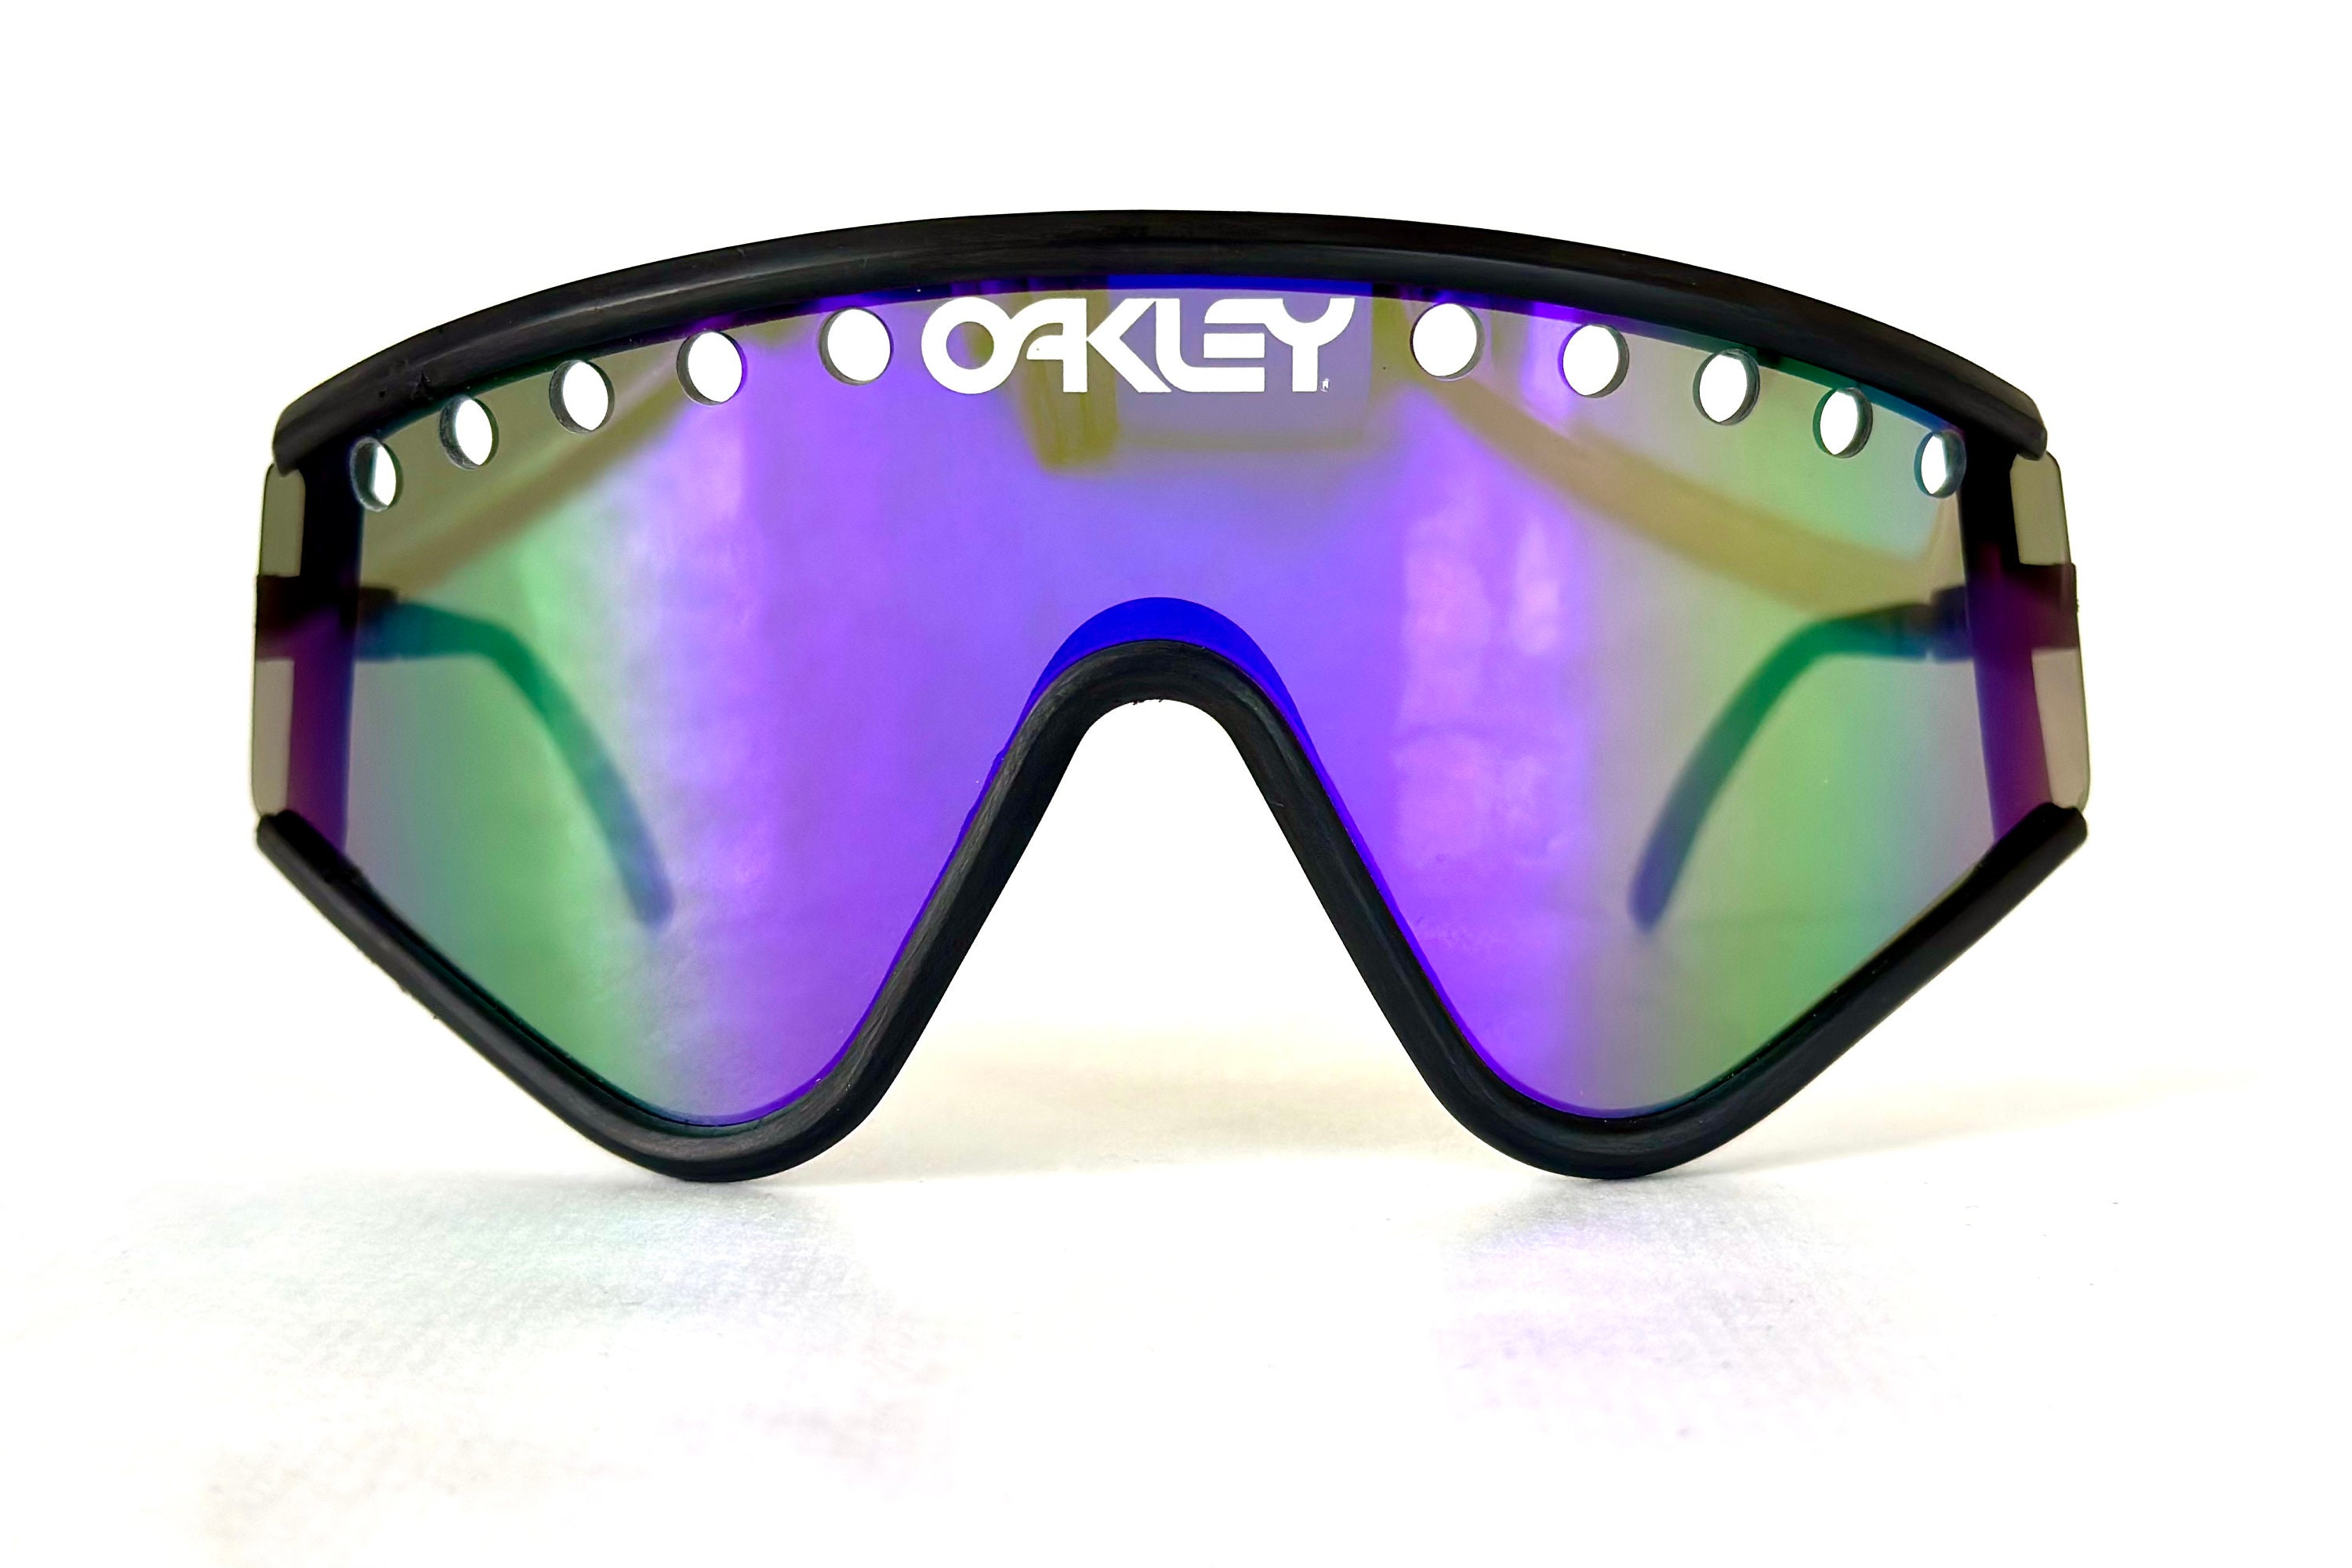 Vintage 1988 Oakley Factory Pilot Eyeshade Sunglasses Full Set Including Vented Violet Iridium